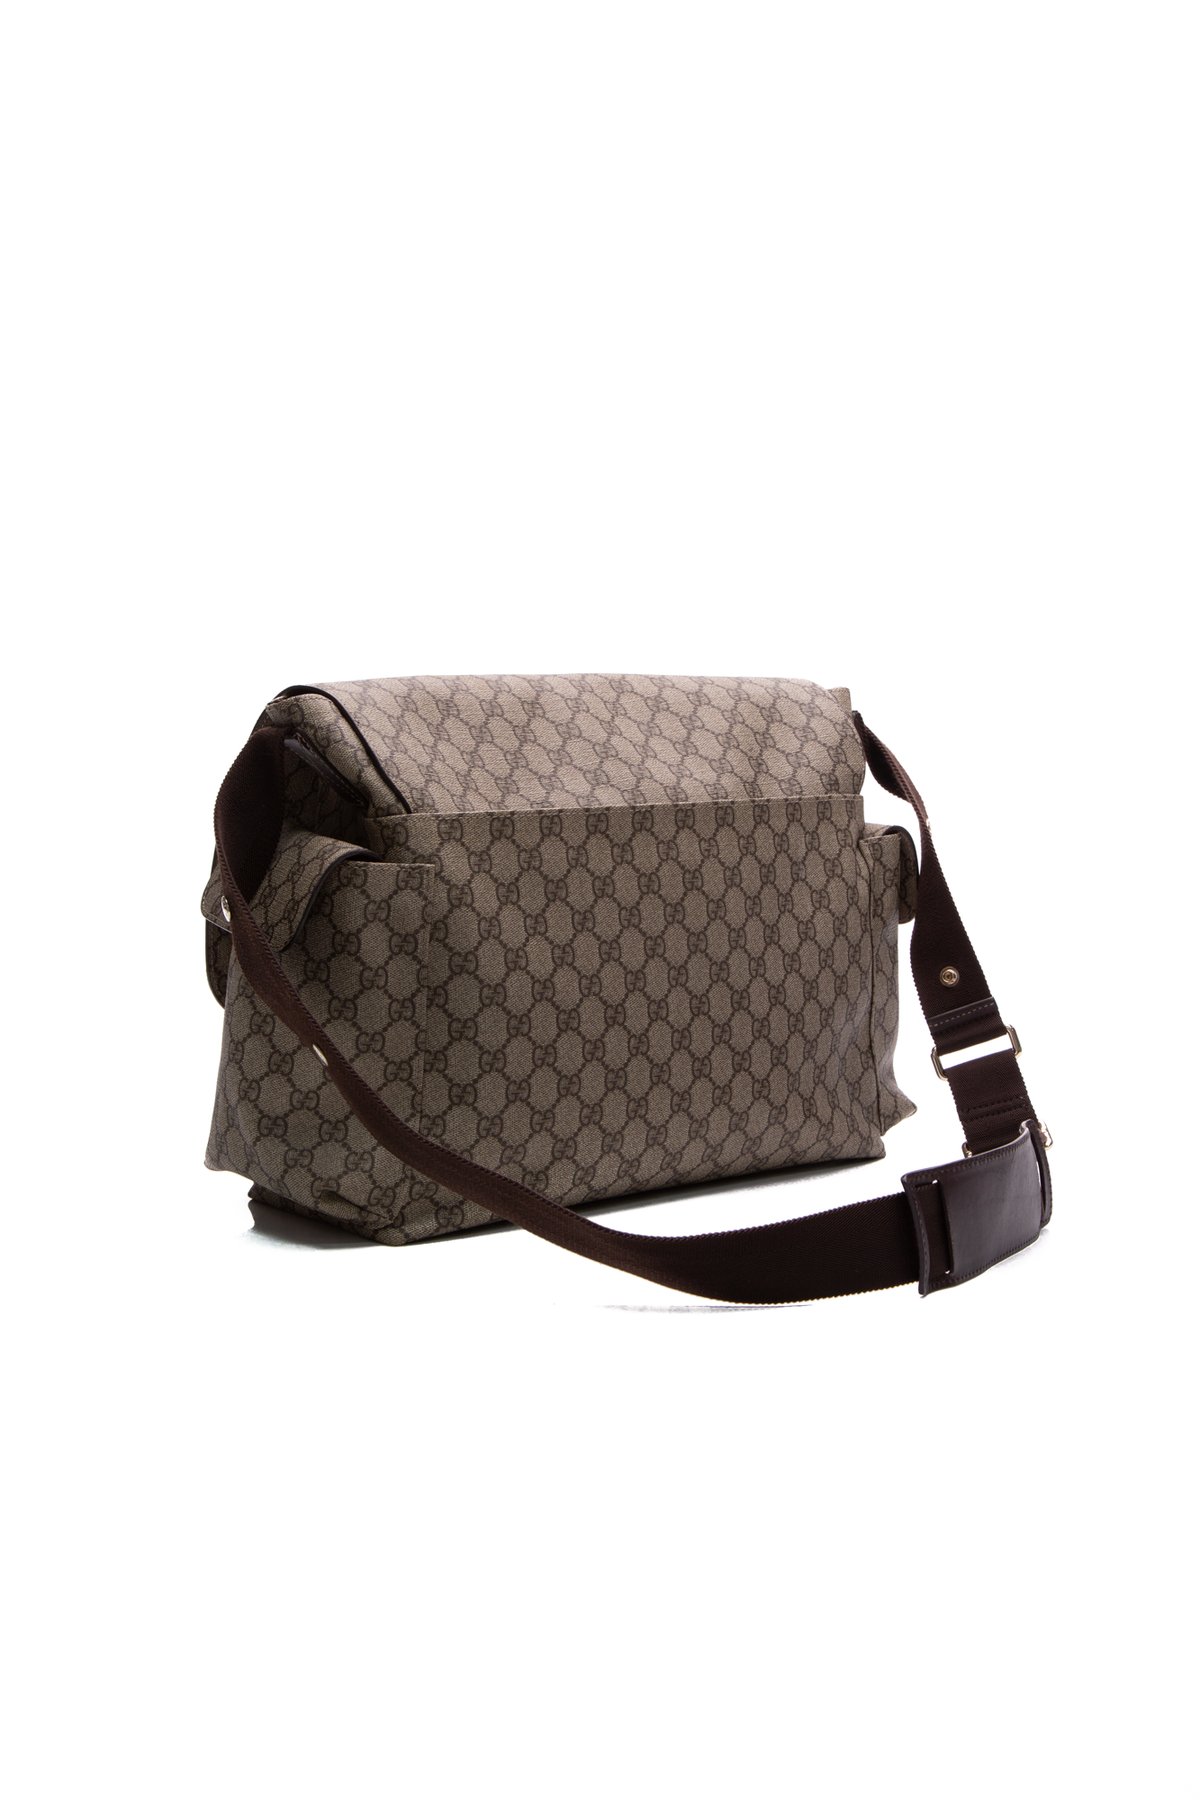 Louis Vuitton Diaper bag. #LouisVuittonBag #BabyBag #Designerbag